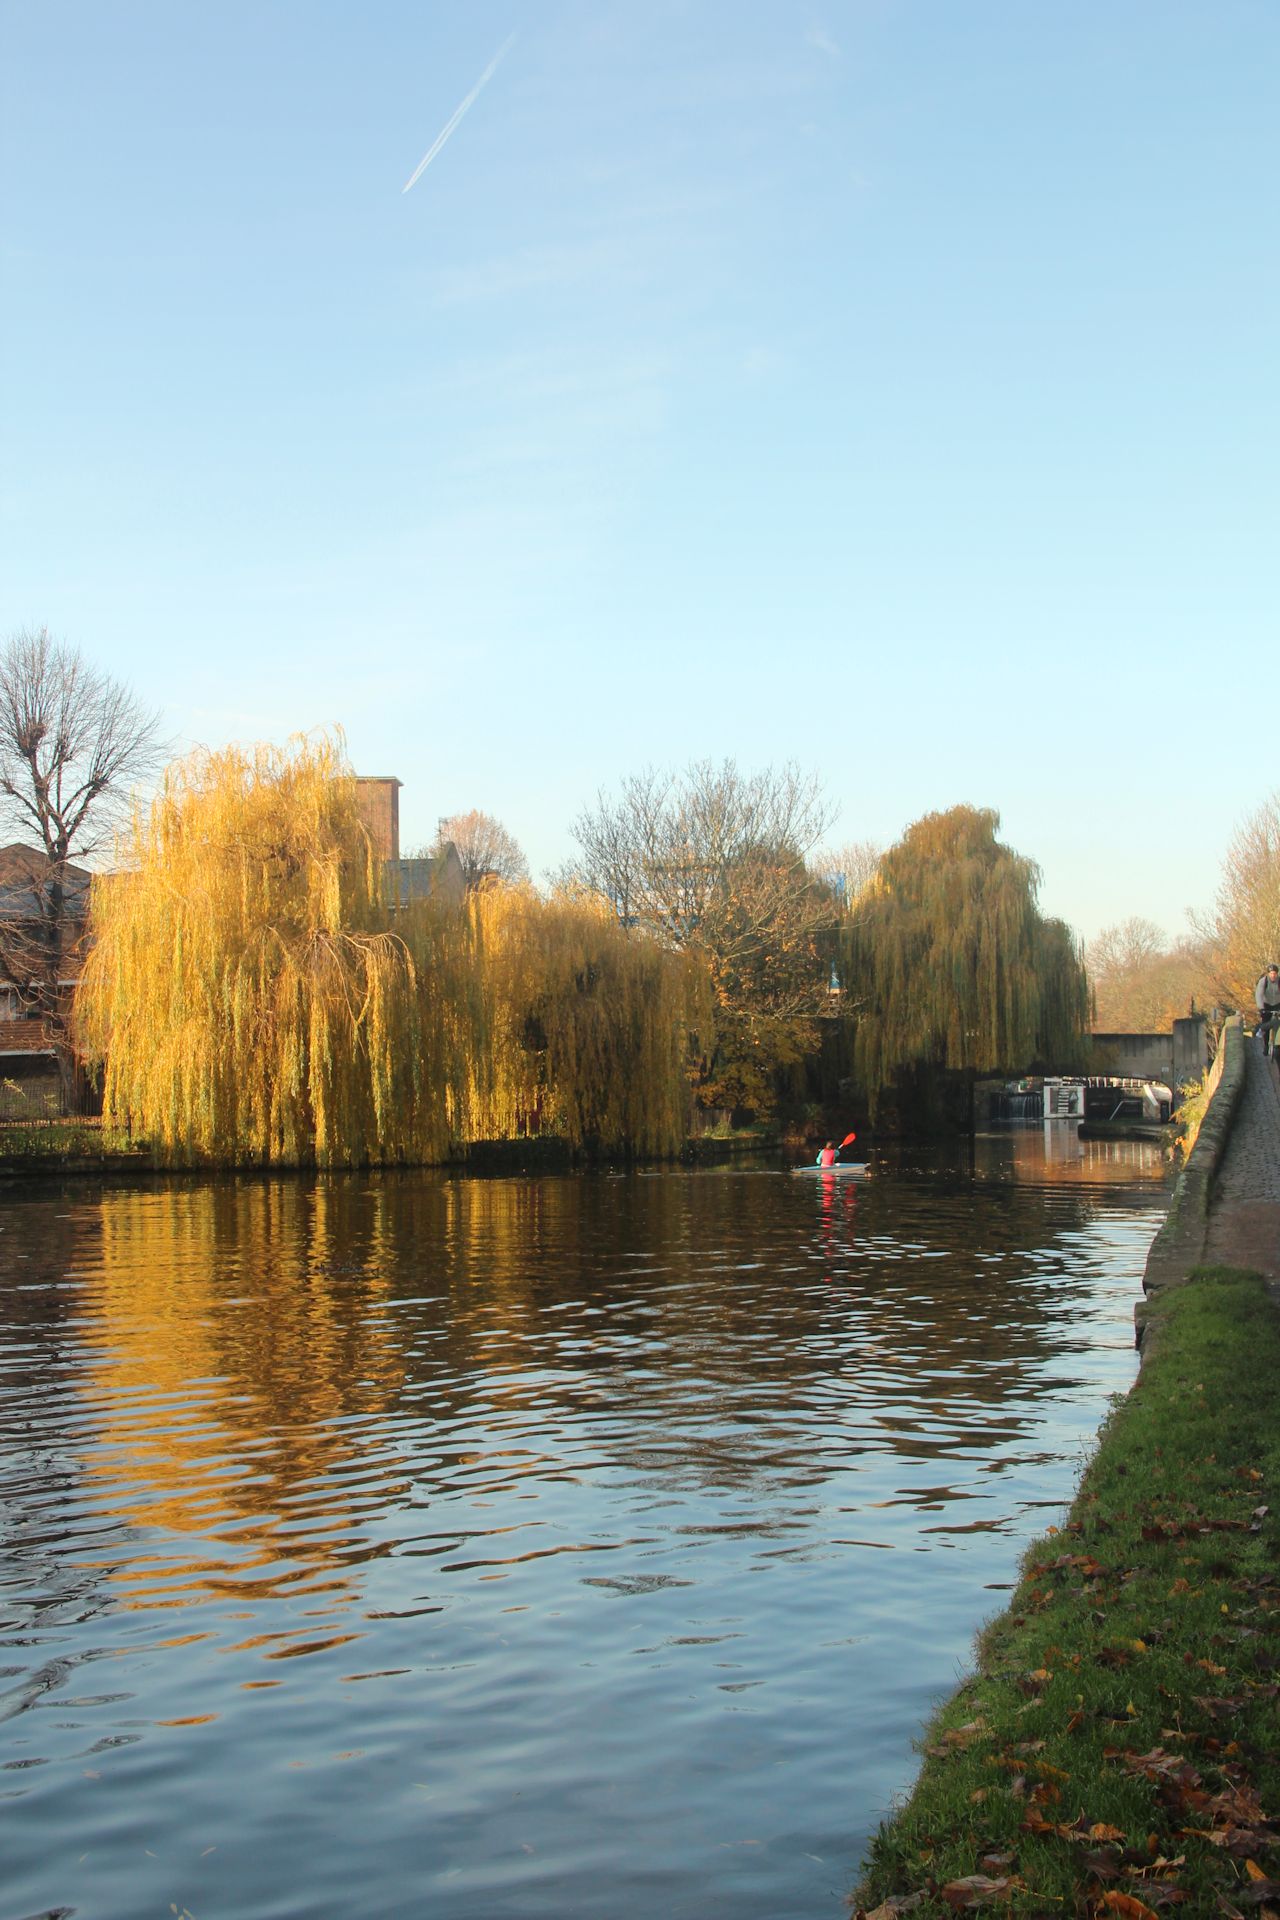 Kayaking on Regents Canal